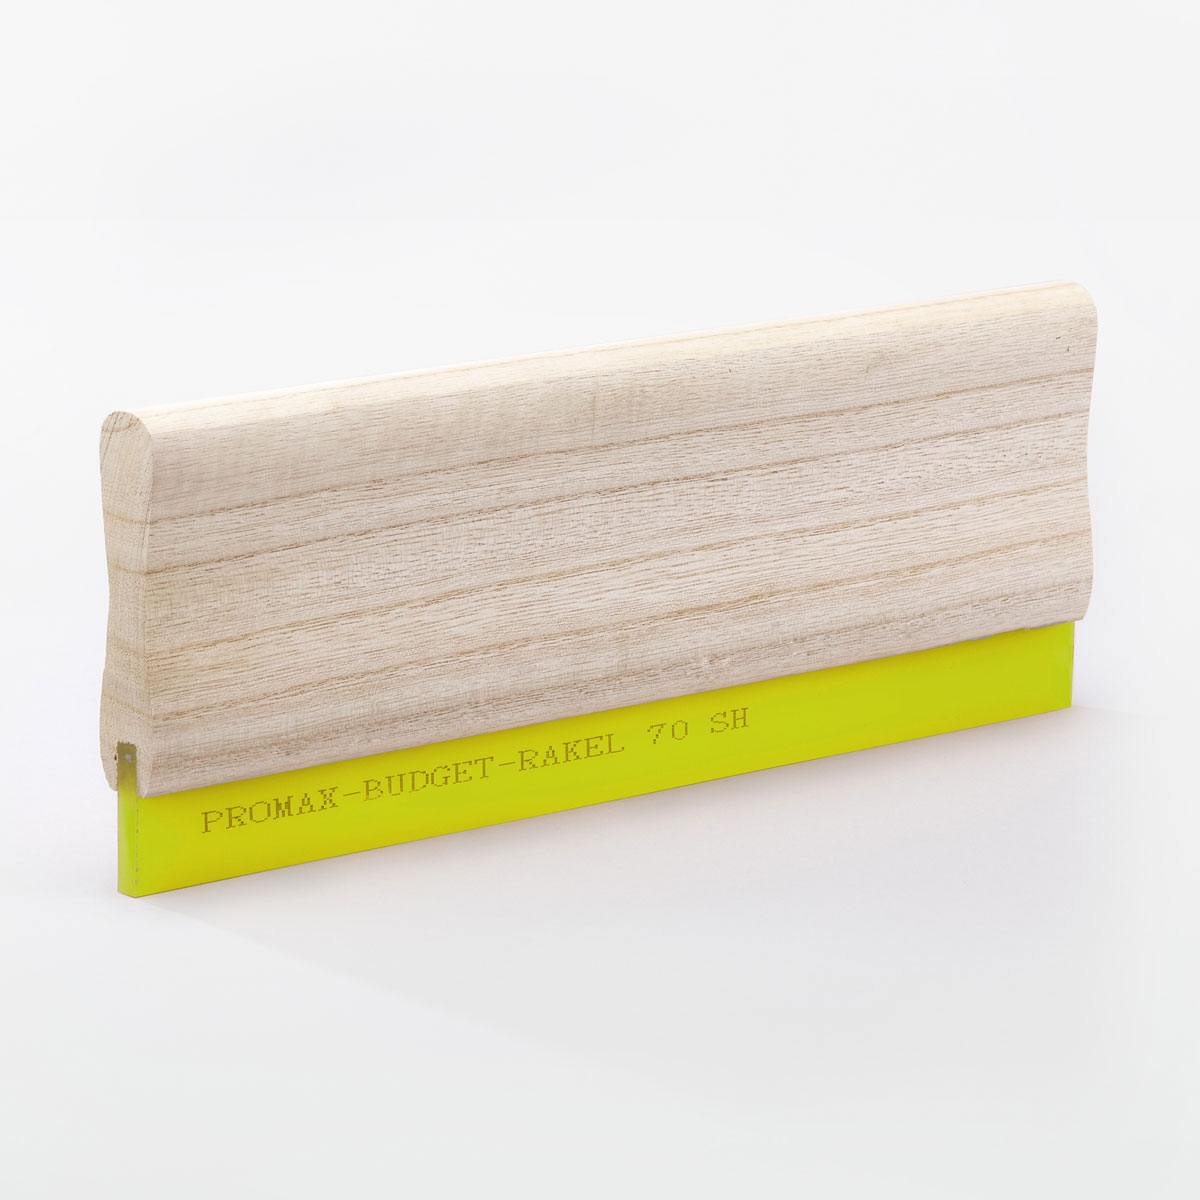 15cm Holz-Rakel in 65 70 75 Shore Siebdruckrakel Textildruck Holzrakel Siebdruck 